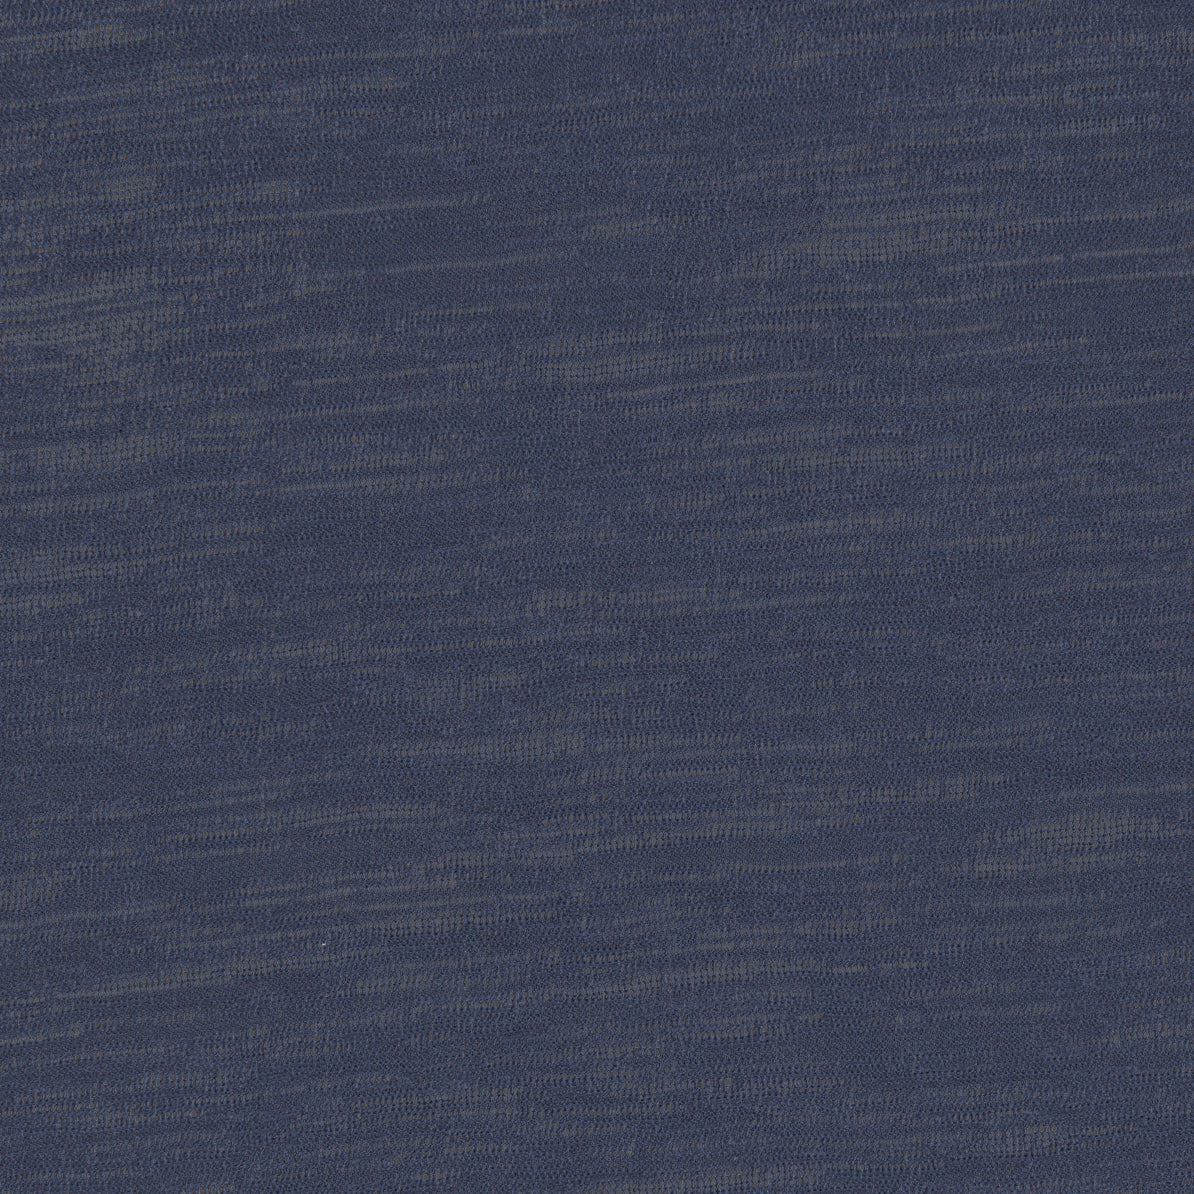 15011-09 Dark Ash Blue Polyester Plain Dyed 100% 58" 95g/yd blue knit plain dyed polyester Solid Color - knit fabric - woven fabric - fabric company - fabric wholesale - fabric b2b - fabric factory - high quality fabric - hong kong fabric - fabric hk - acetate fabric - cotton fabric - linen fabric - metallic fabric - nylon fabric - polyester fabric - spandex fabric - chun wing hing - cwh hk - fabric worldwide ship - 針織布 - 梳織布 - 布料公司- 布料批發 - 香港布料 - 秦榮興